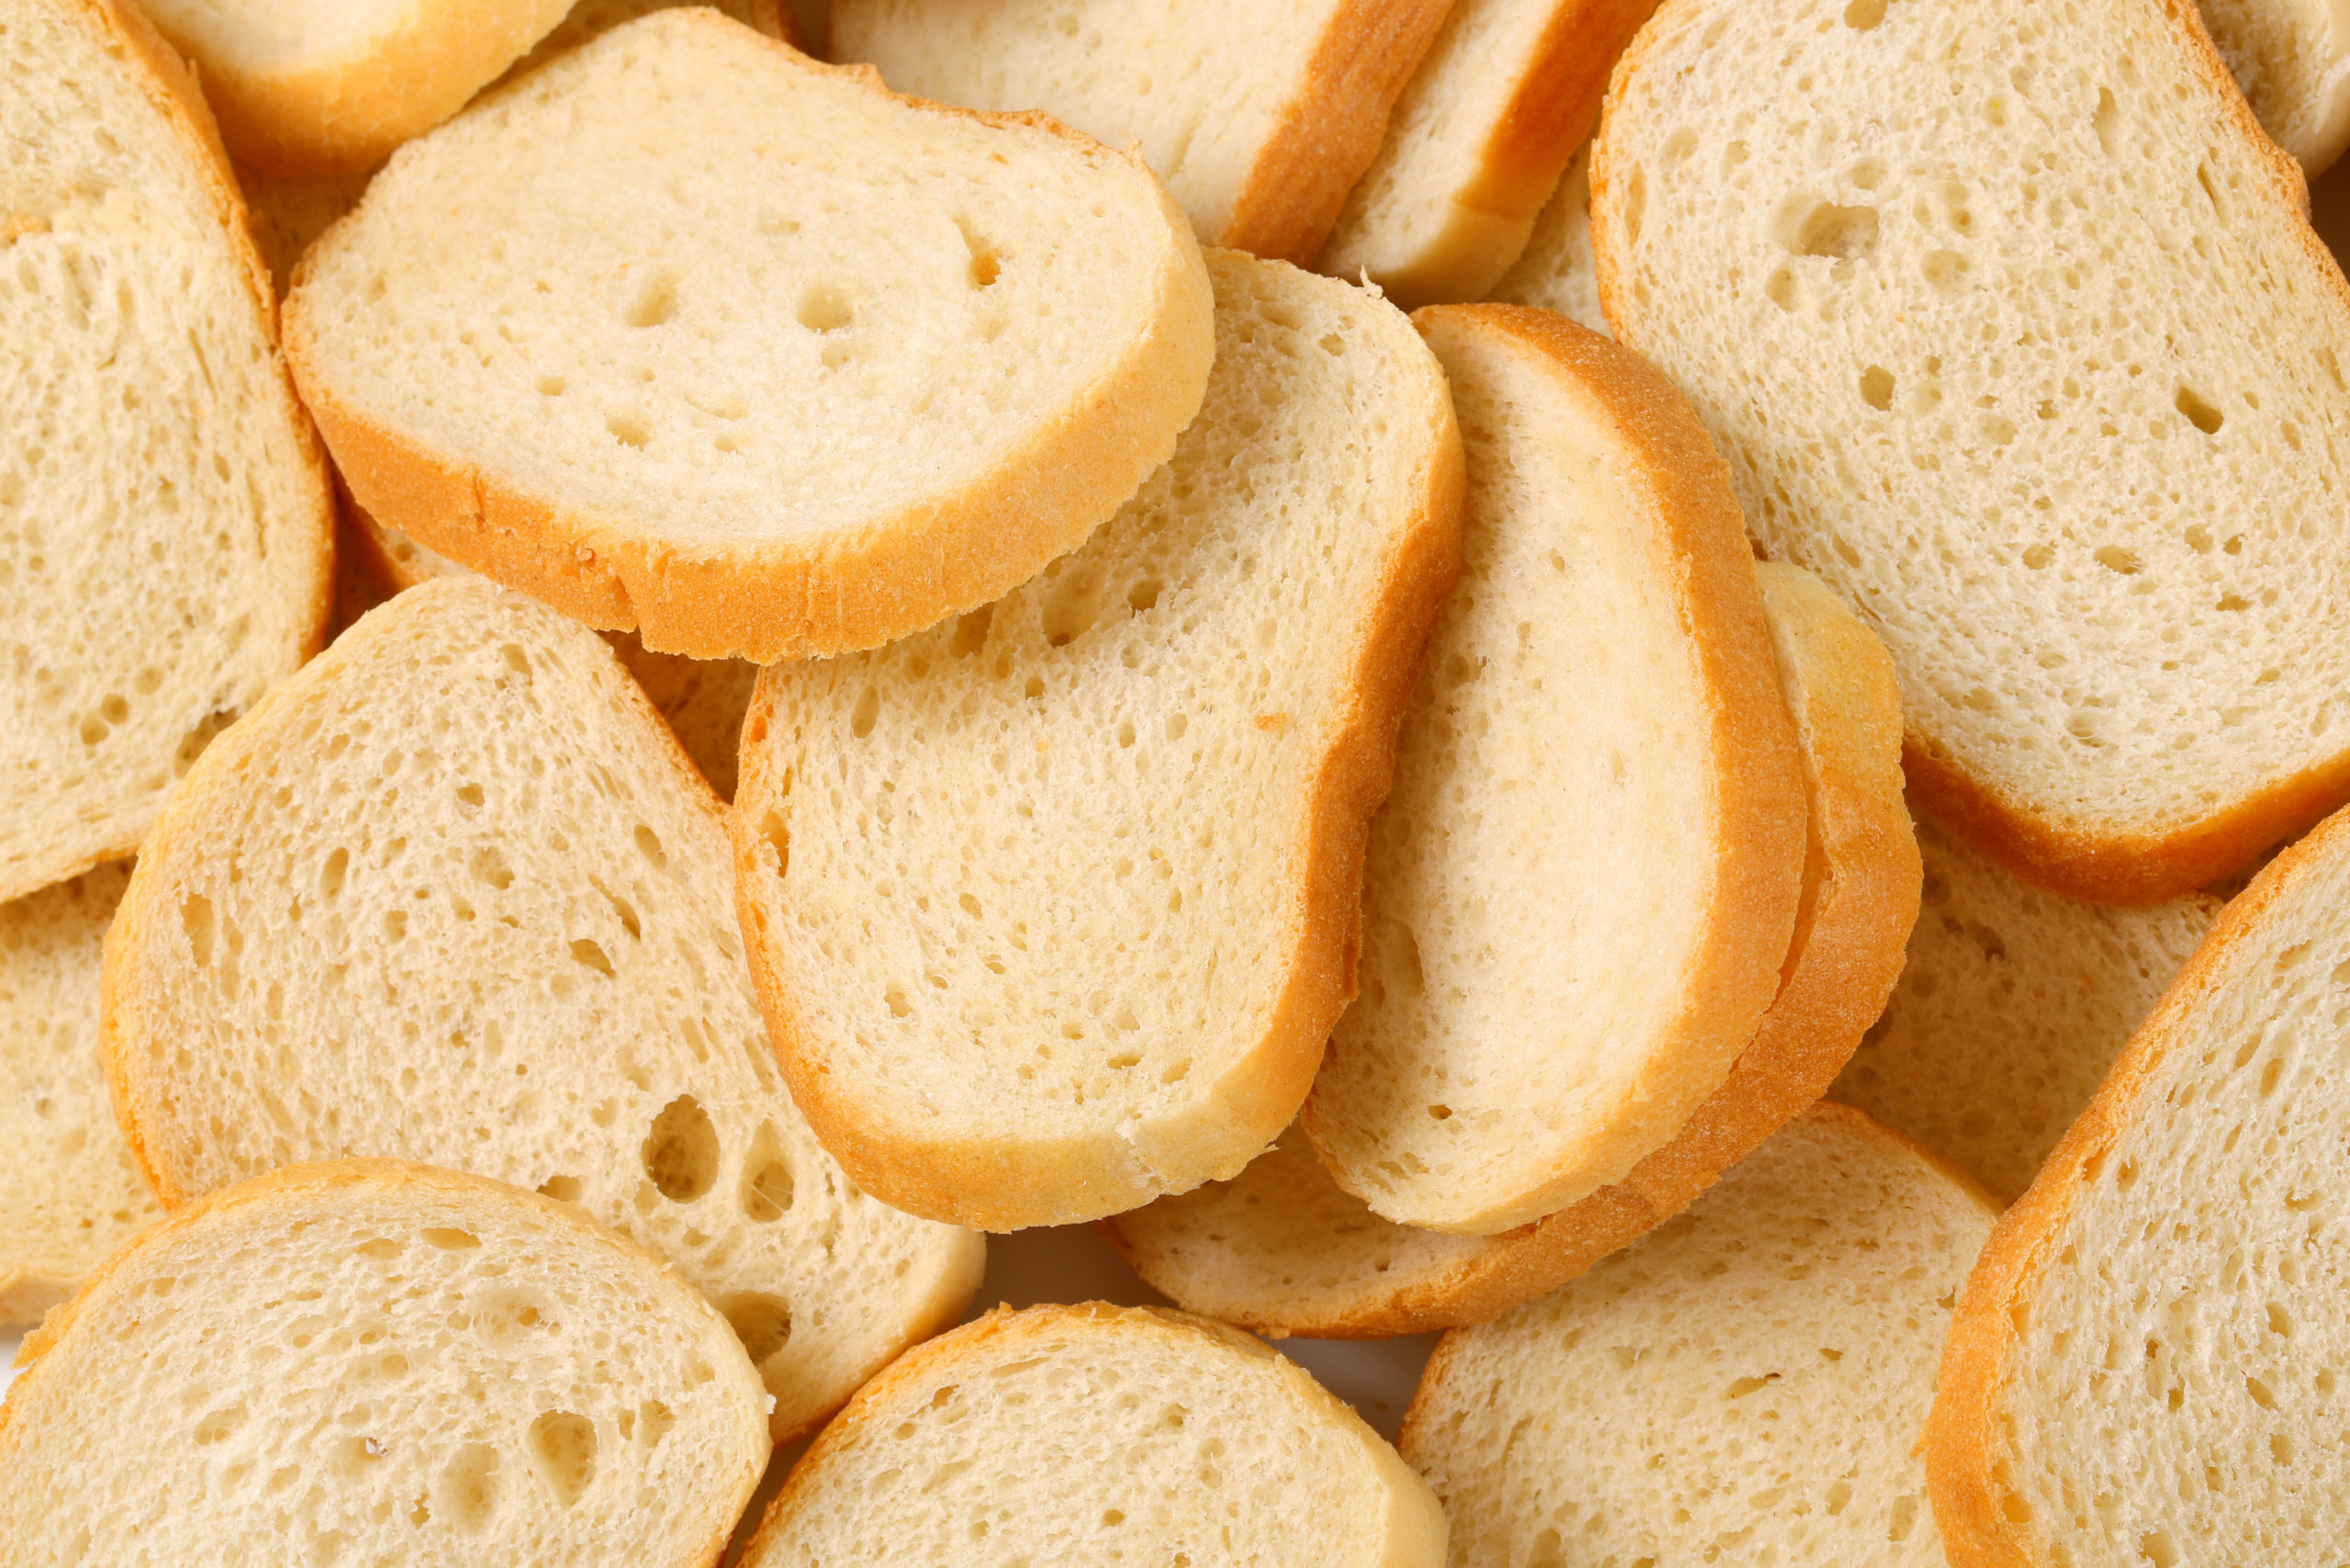 Everyday economics and the impact of Wonder Bread